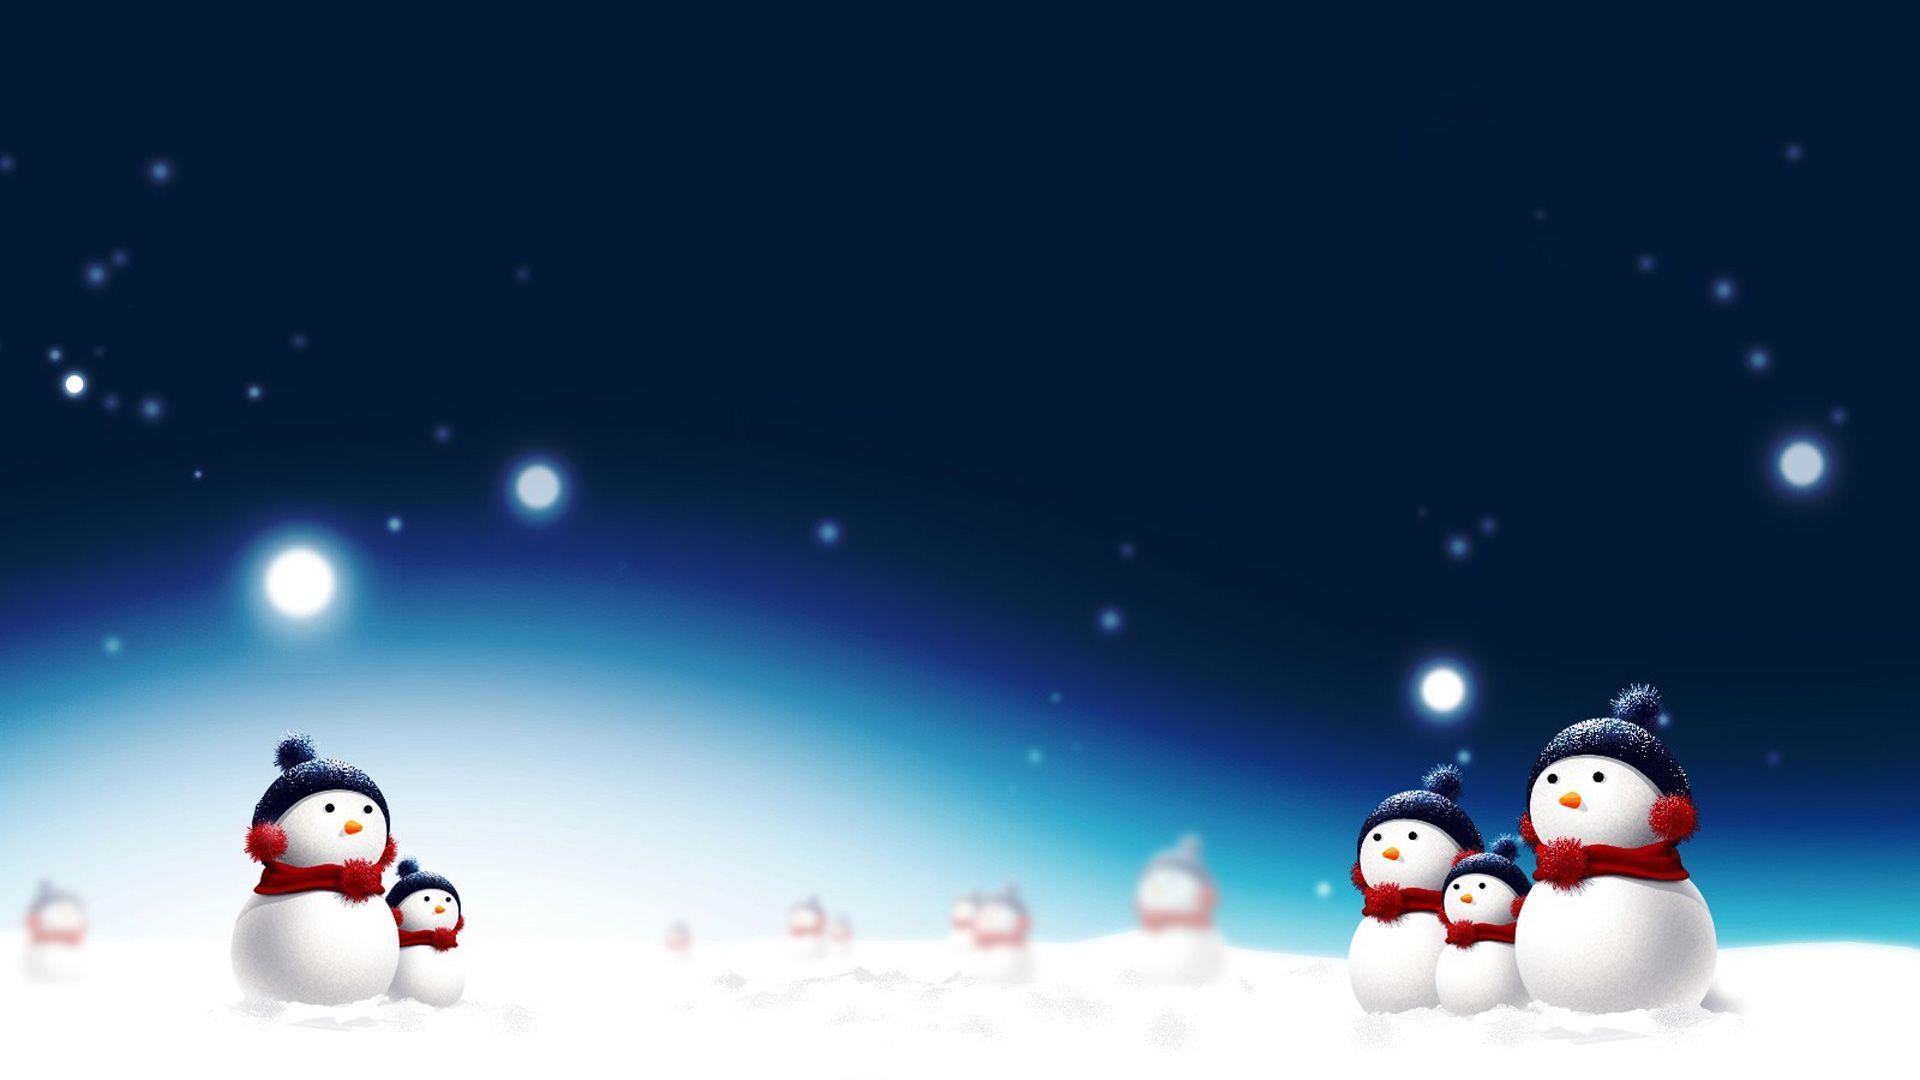 Snowman In Christmas Night Wallpaper